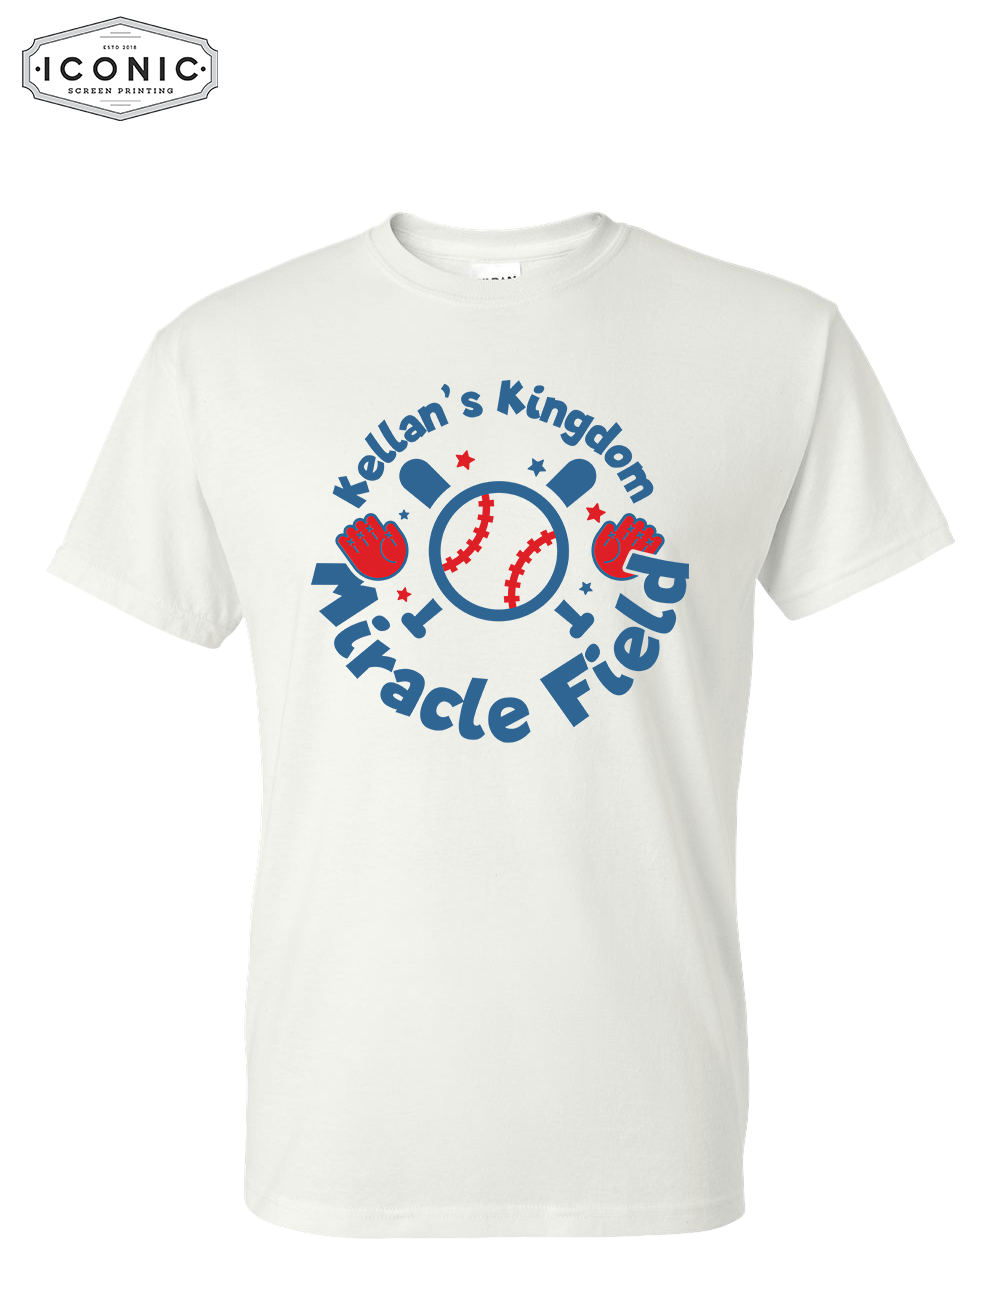 Baseball Glove - DryBlend T-shirt